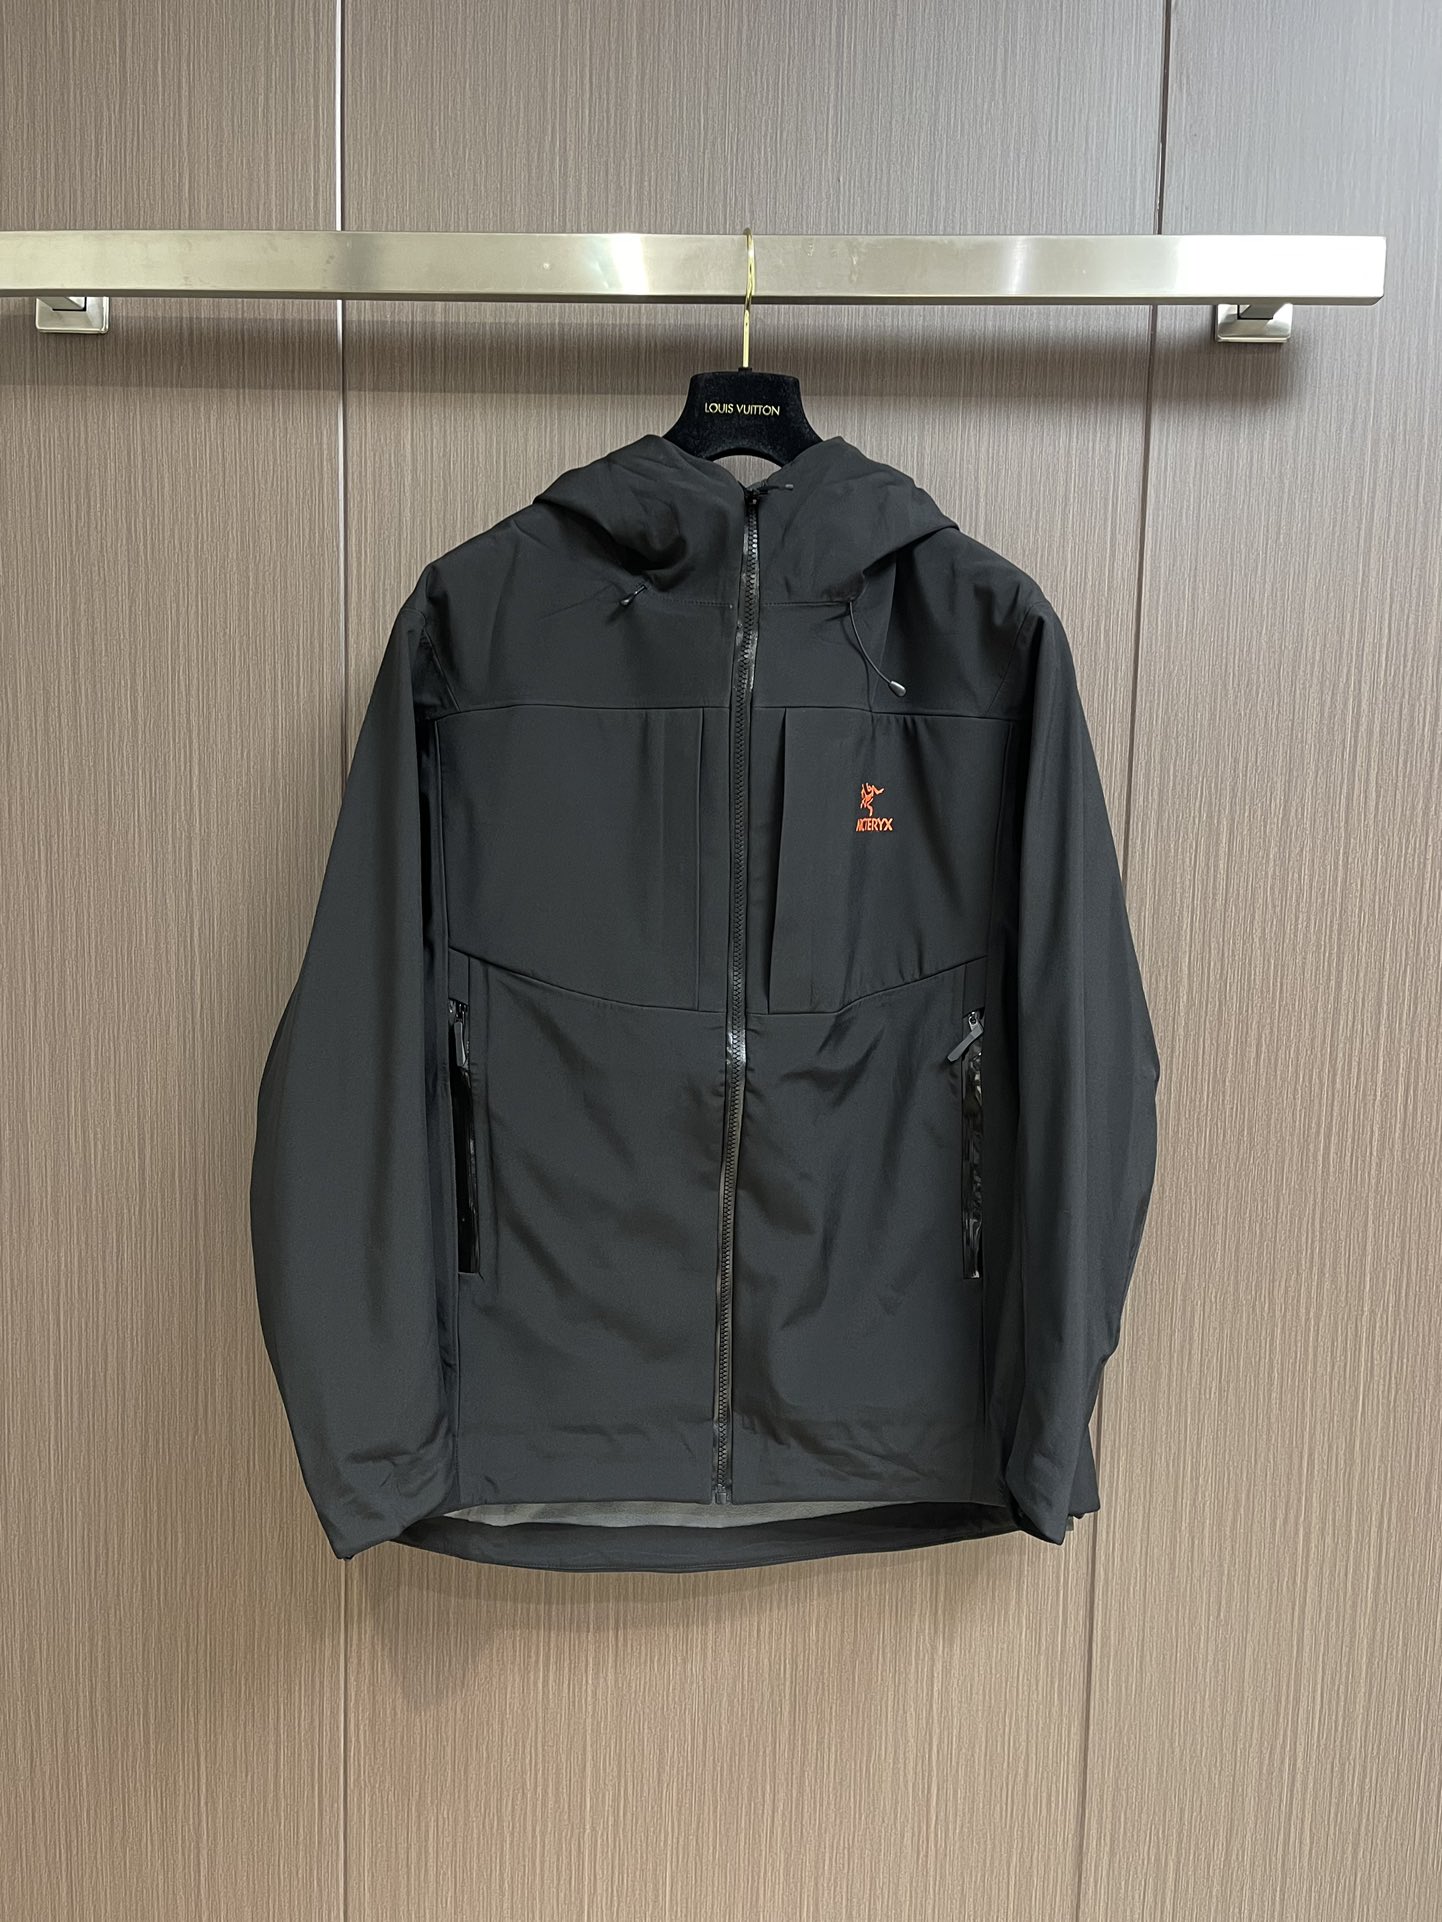 Arc’teryx Clothing Coats & Jackets Hooded Top